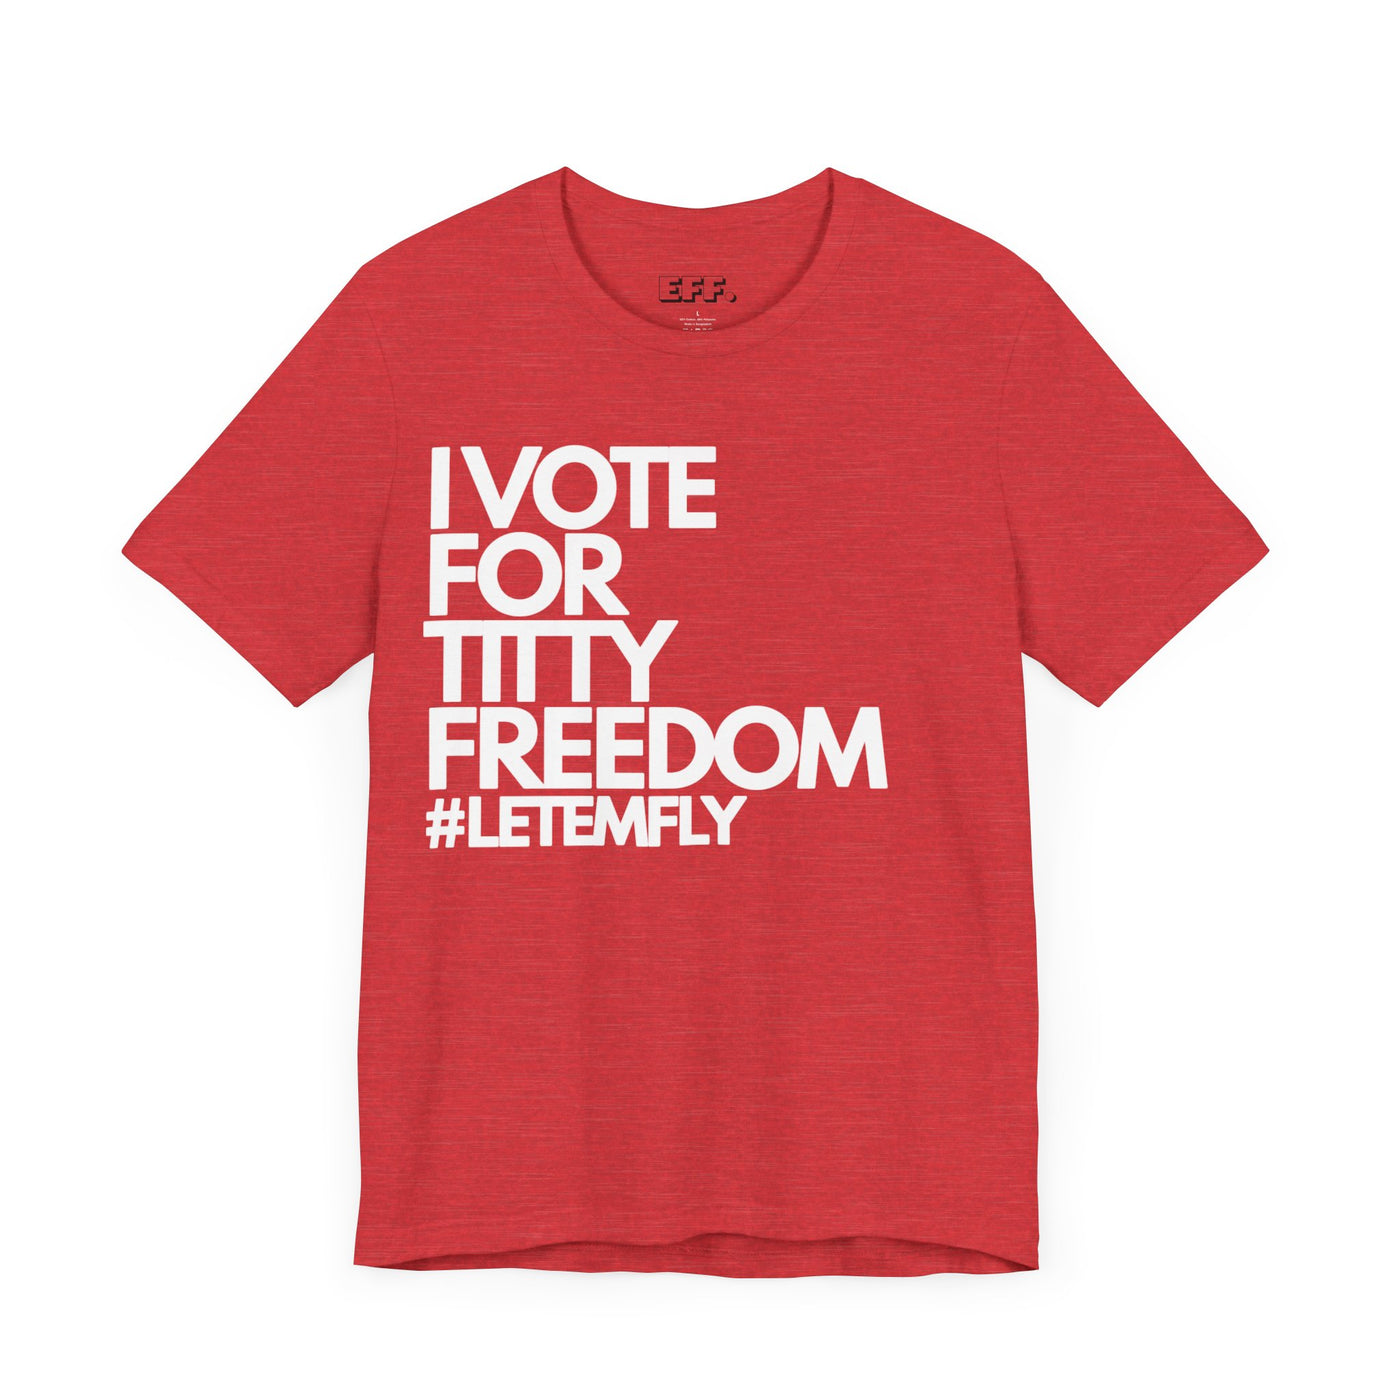 I Vote For Titty Freedom #letemfly